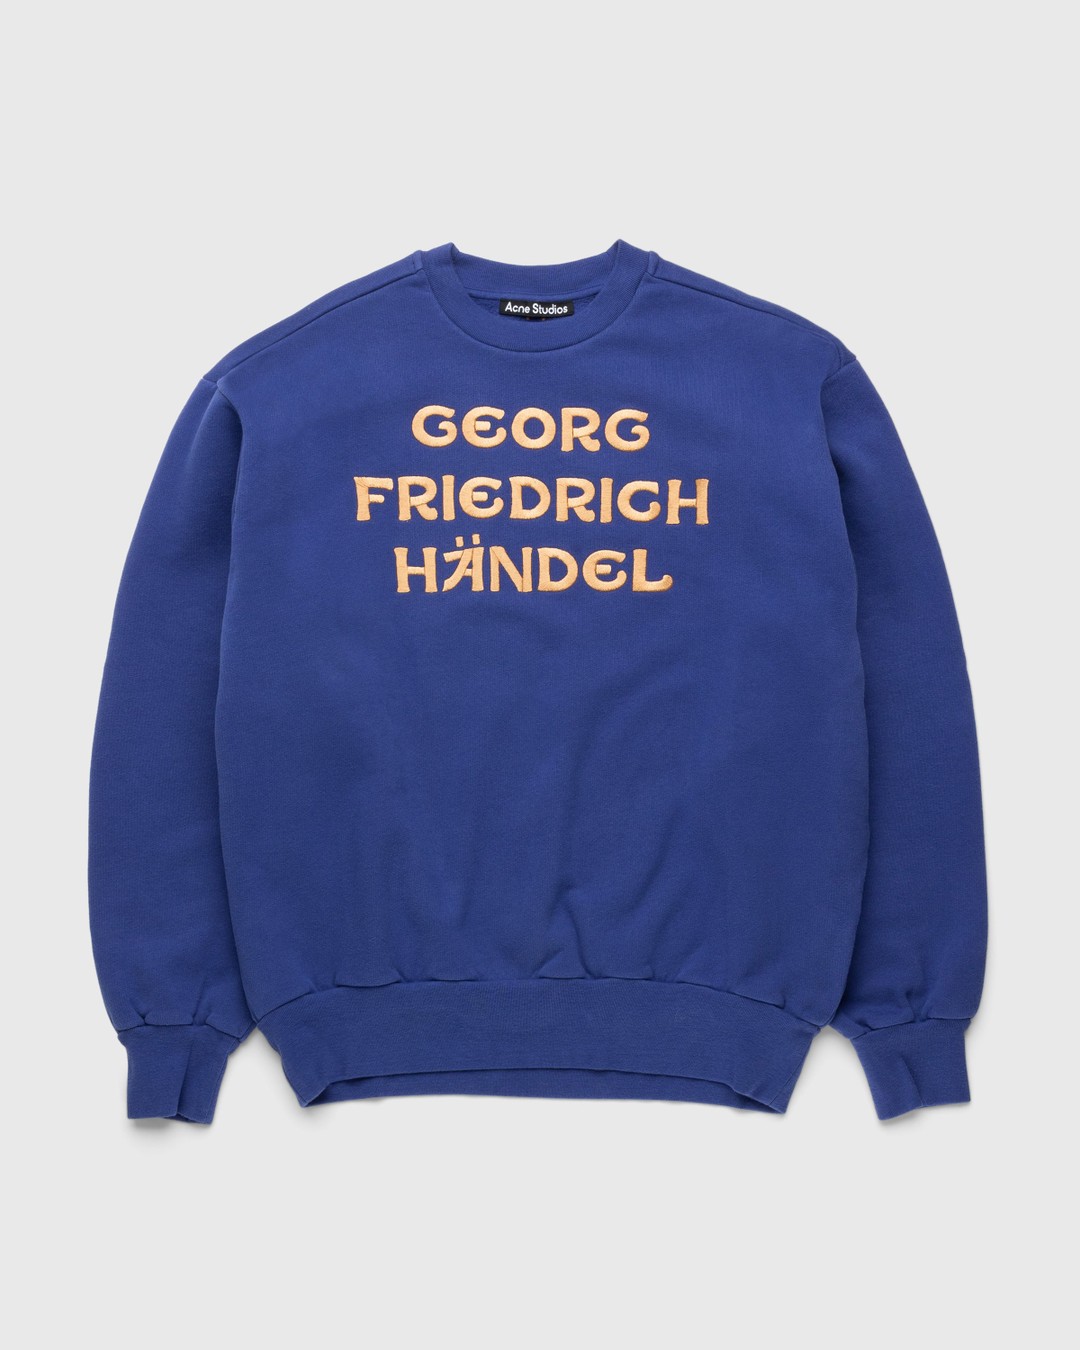 Acne Studios – George Friedrich Handel Embroidered Crewneck Sweatshirt Blue - Sweats - Blue - Image 1